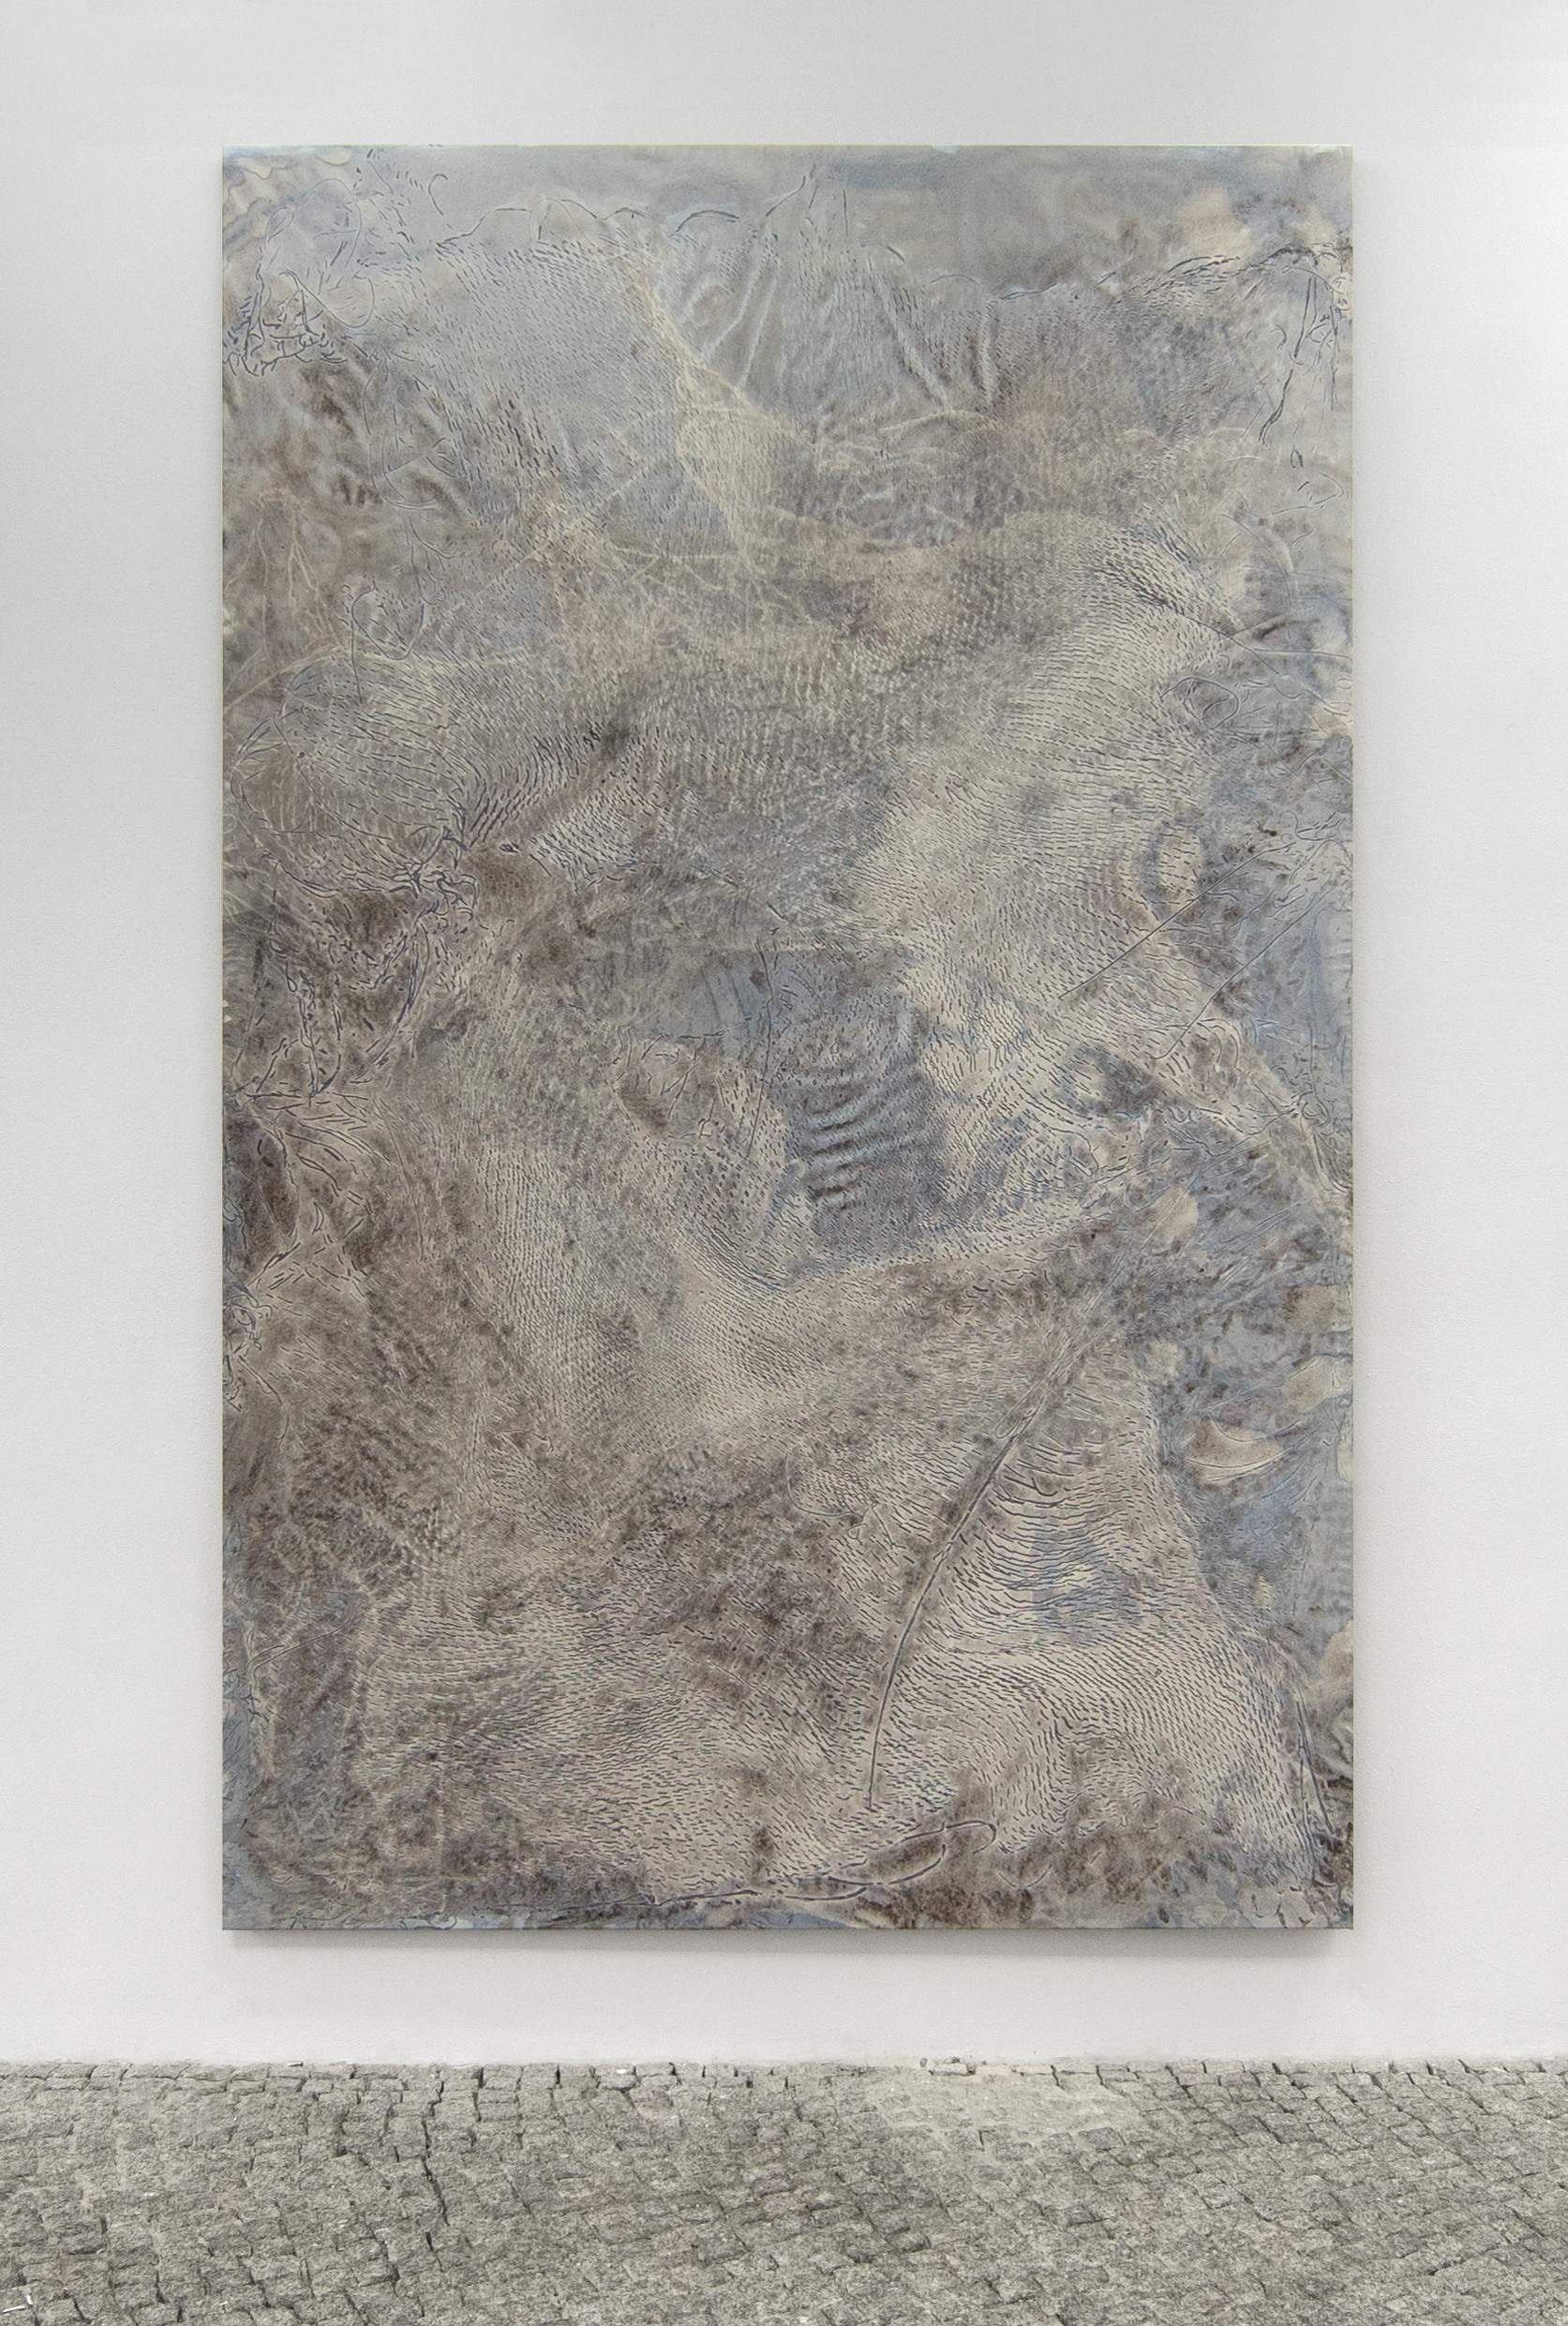 Alizée Gazeau, H_22_8, 2022, acrylic and ink on canvas, 300x190 cm